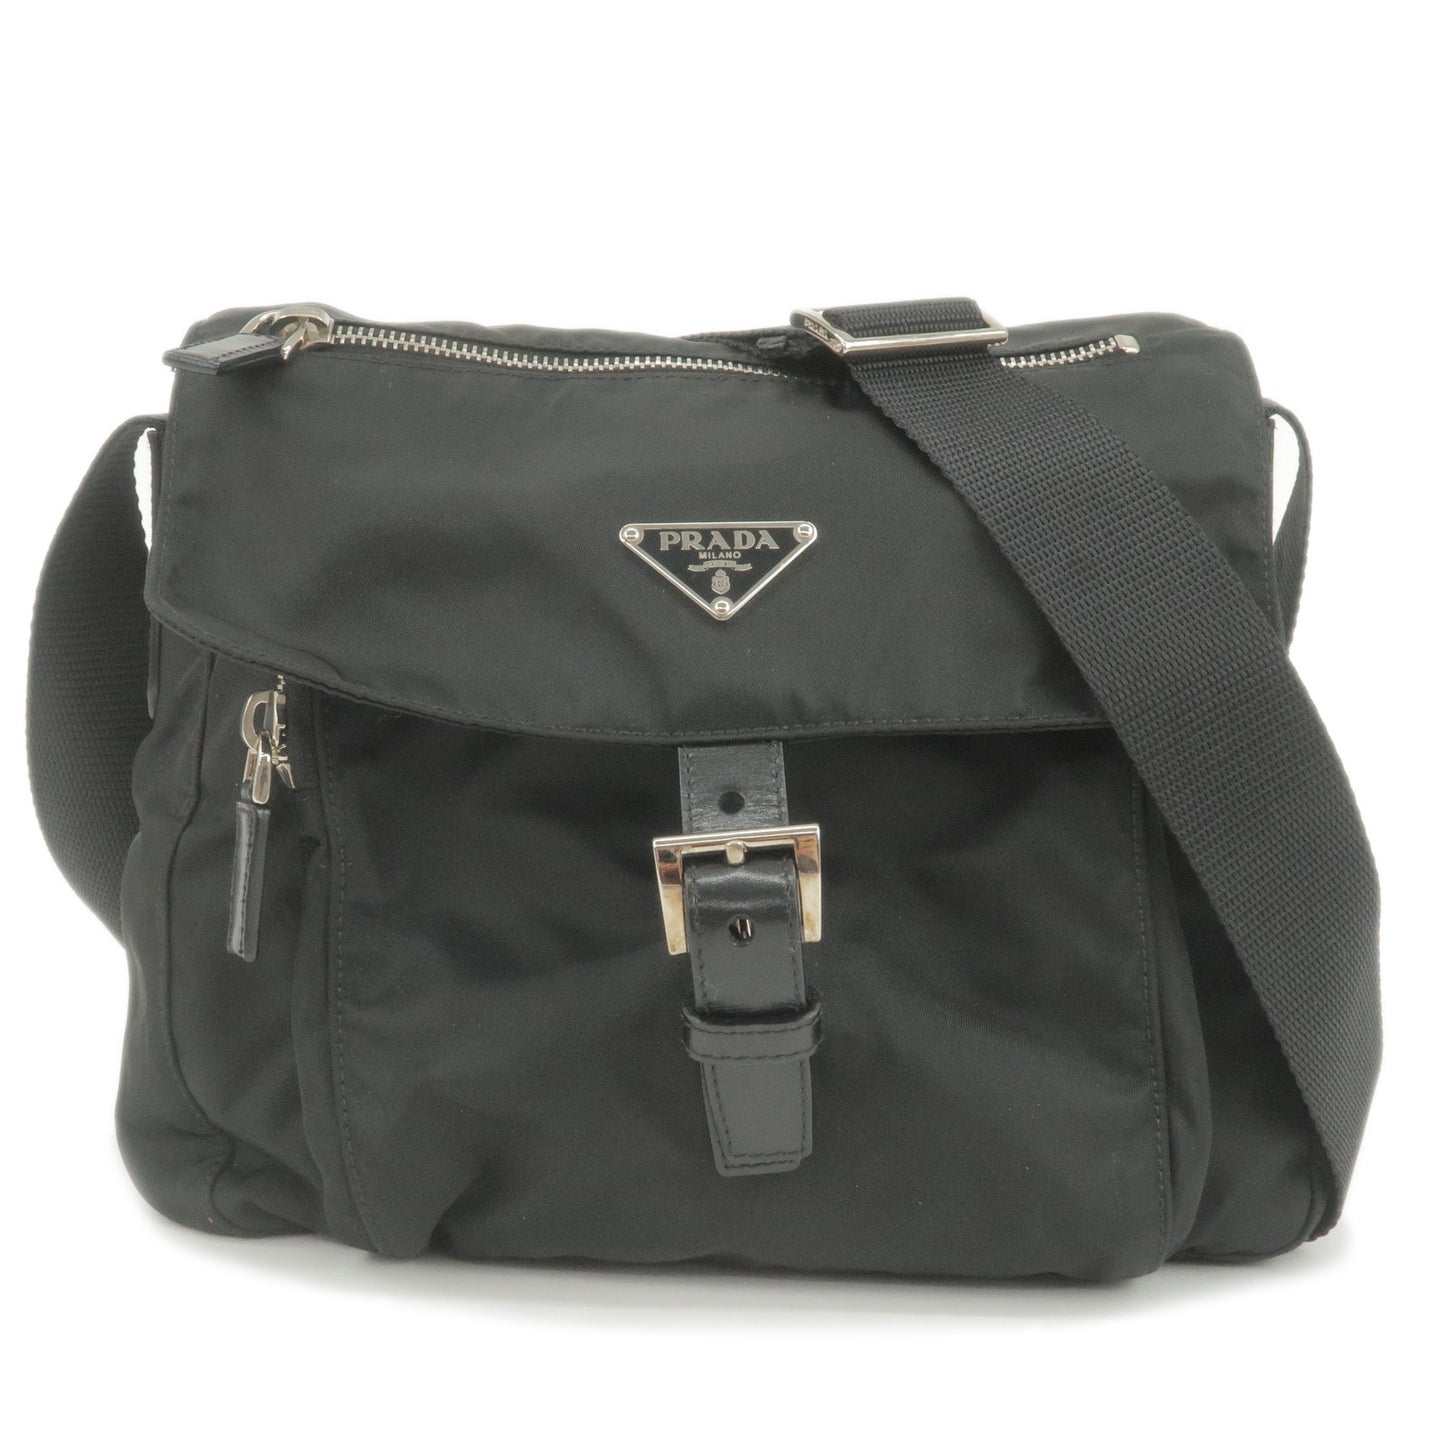 PRADA-Logo-Nylon-Leather-Shoulder-Bag-Hand-Bag-Black-BT8994